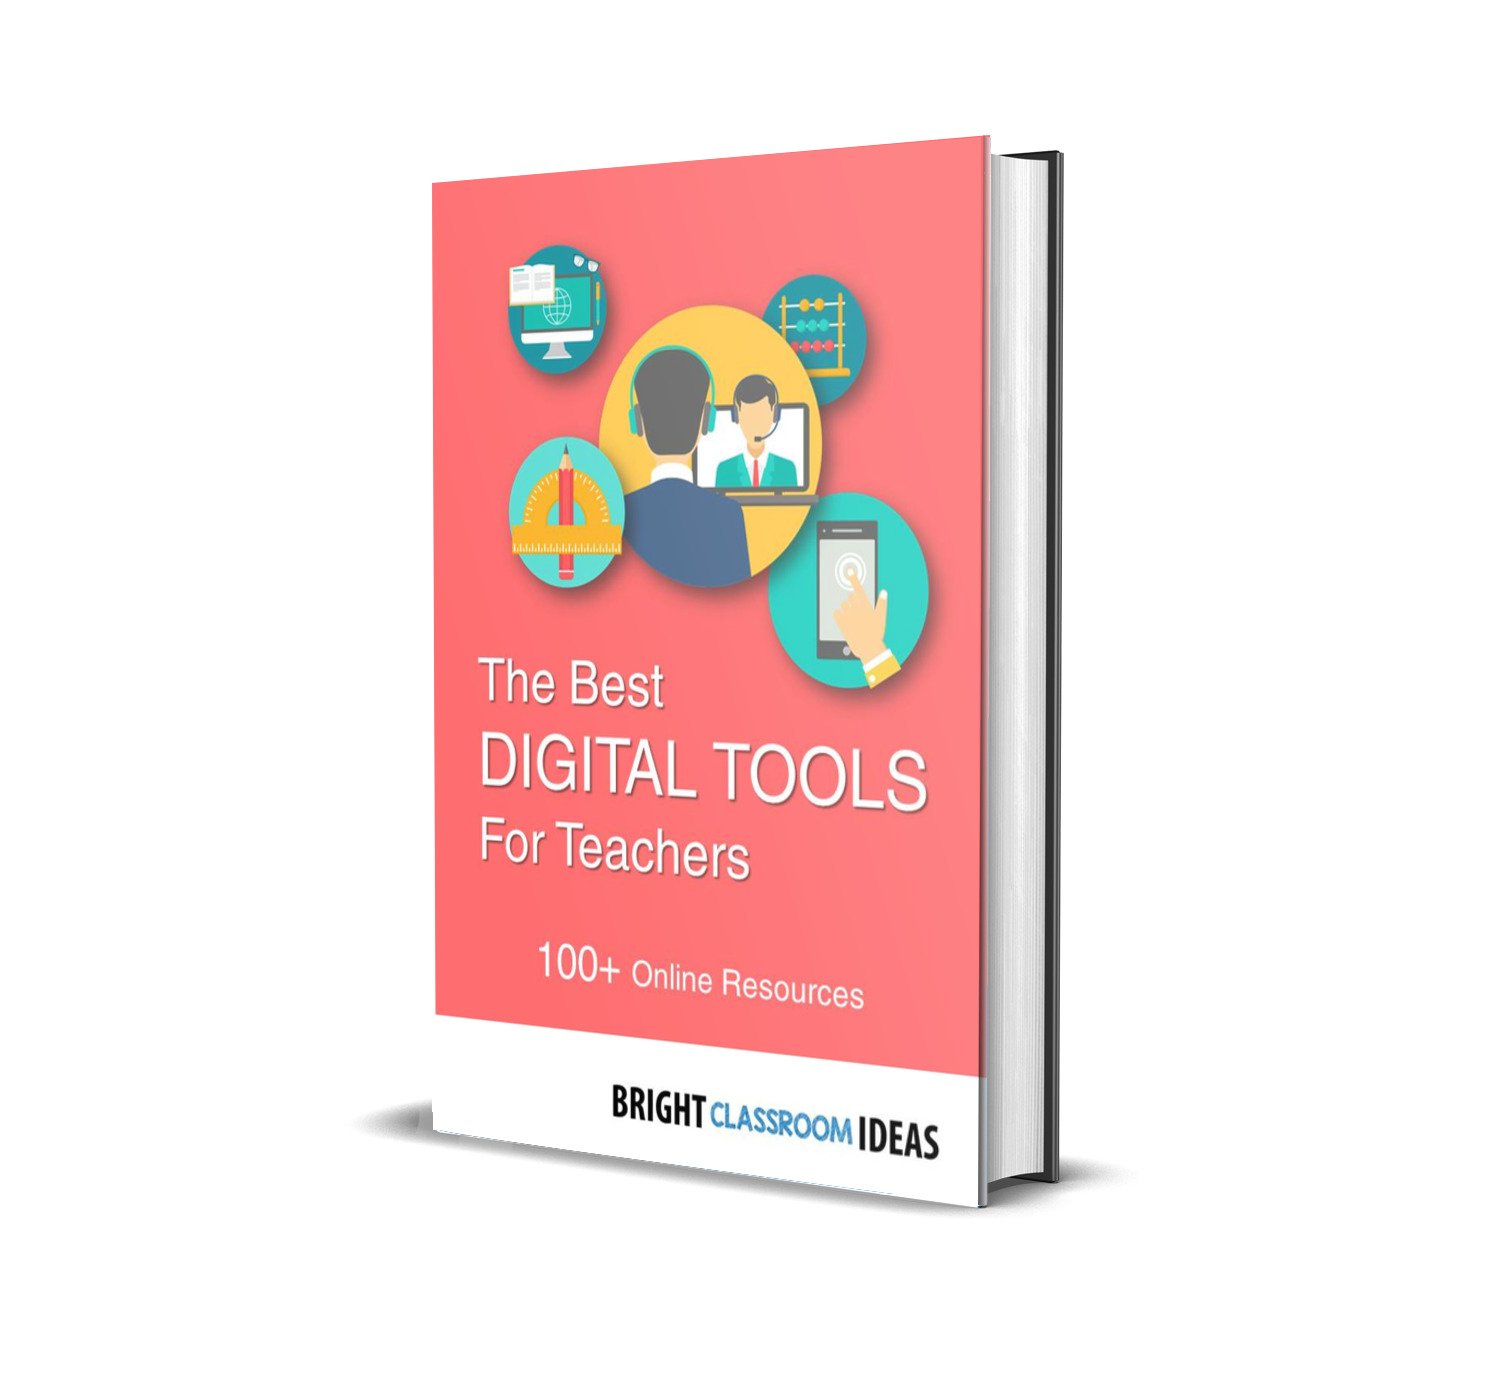 The Best Digital Tools For Teachers